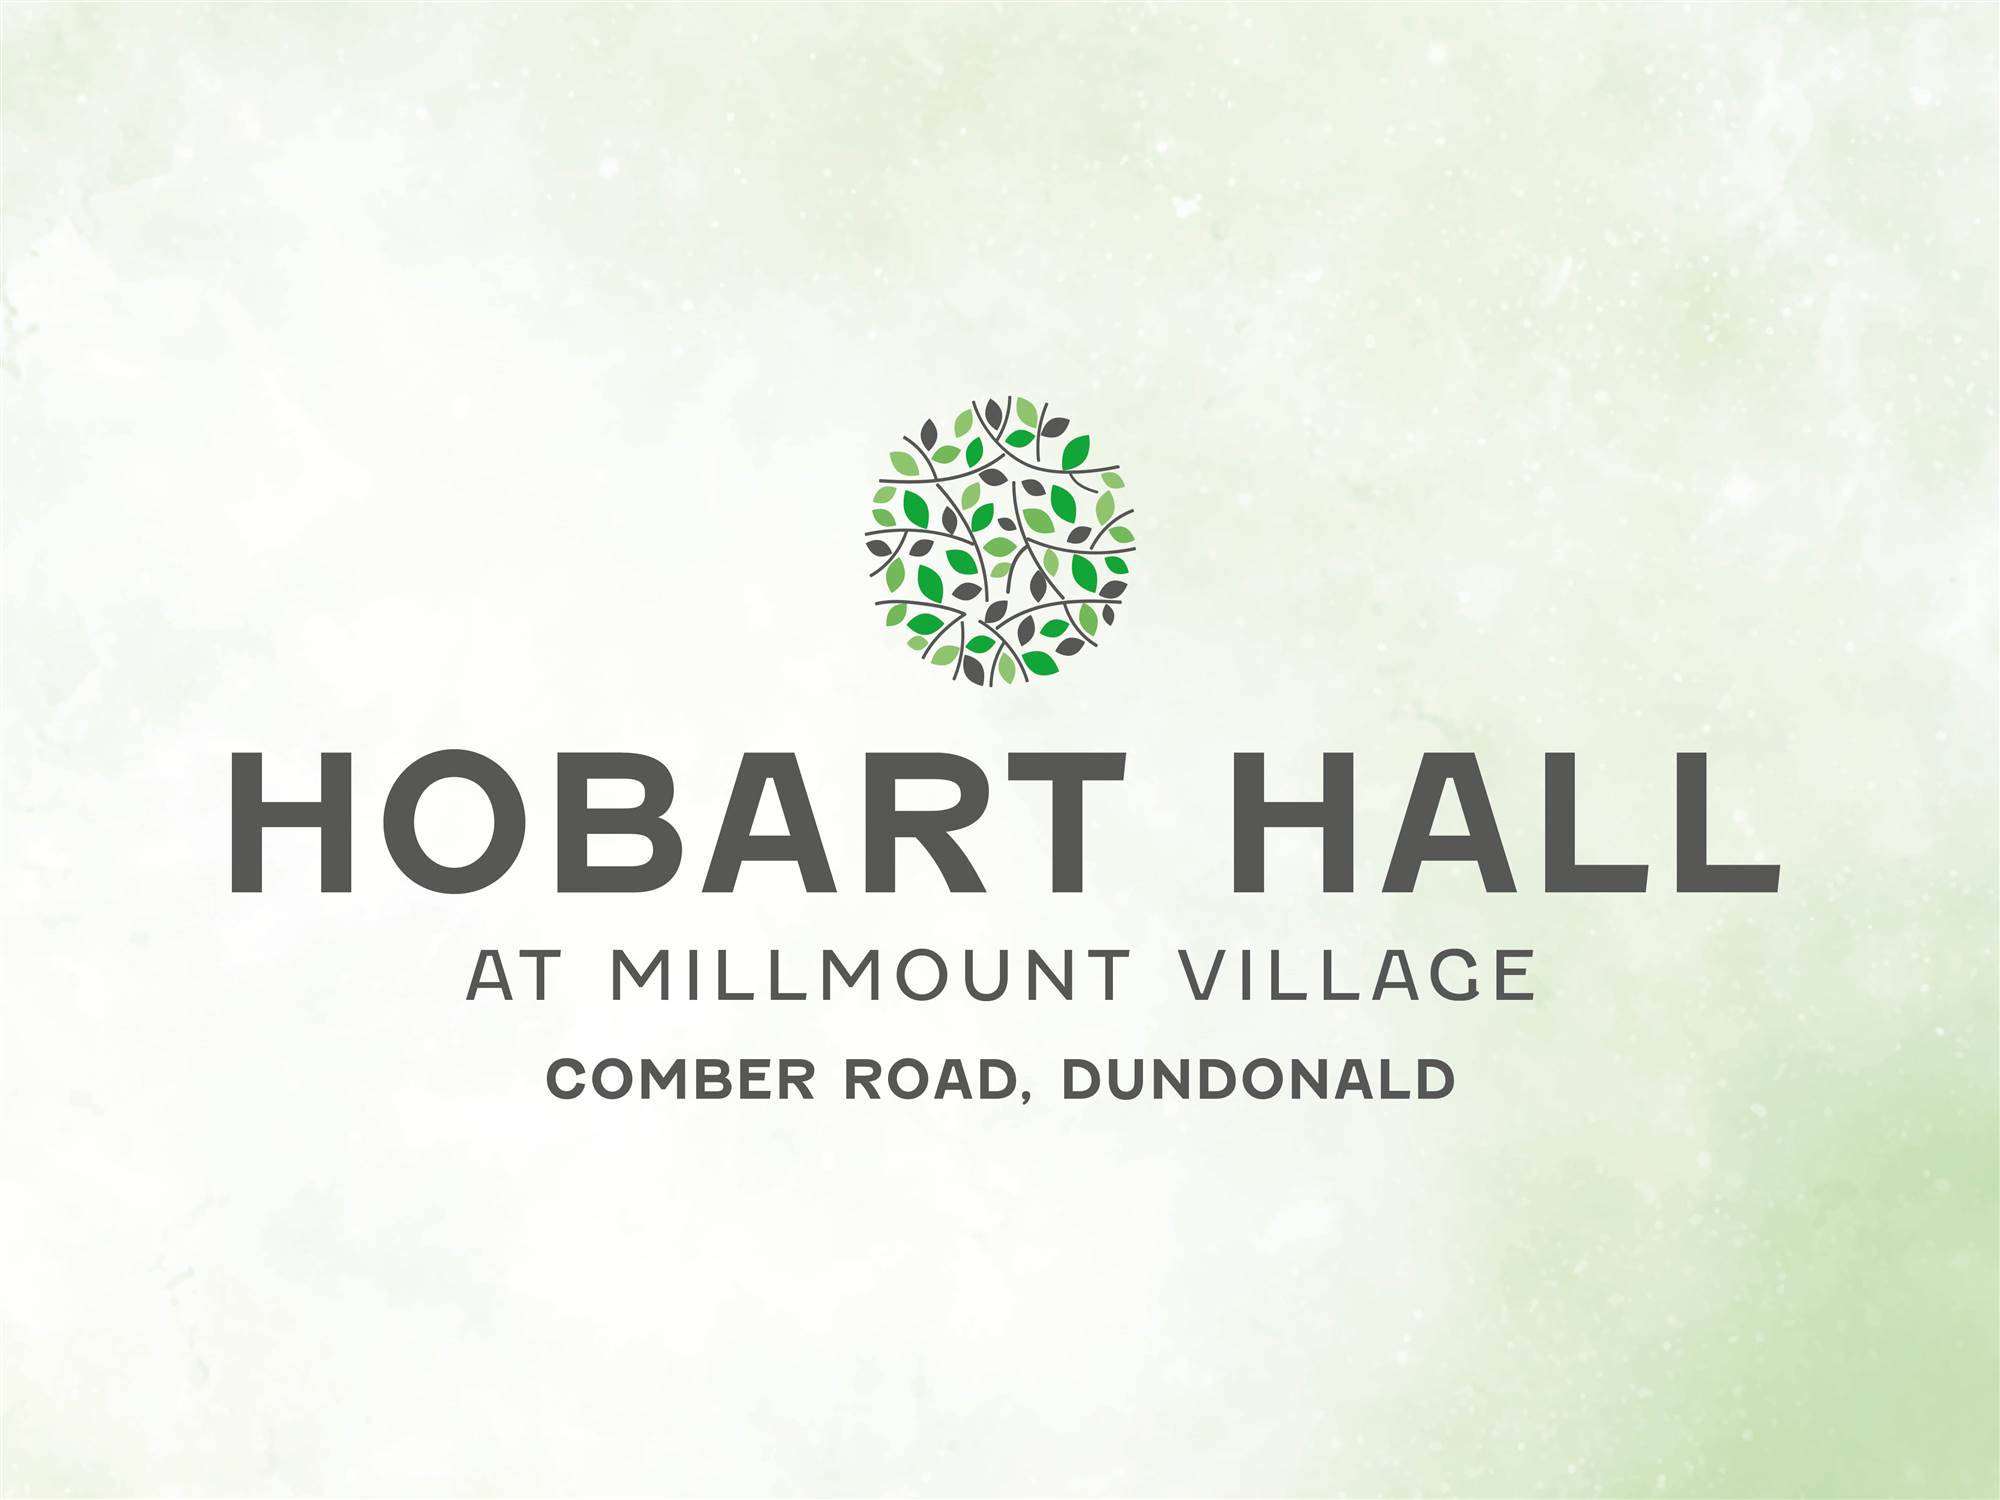 Hobart Hall, Comber Road, Dundonald